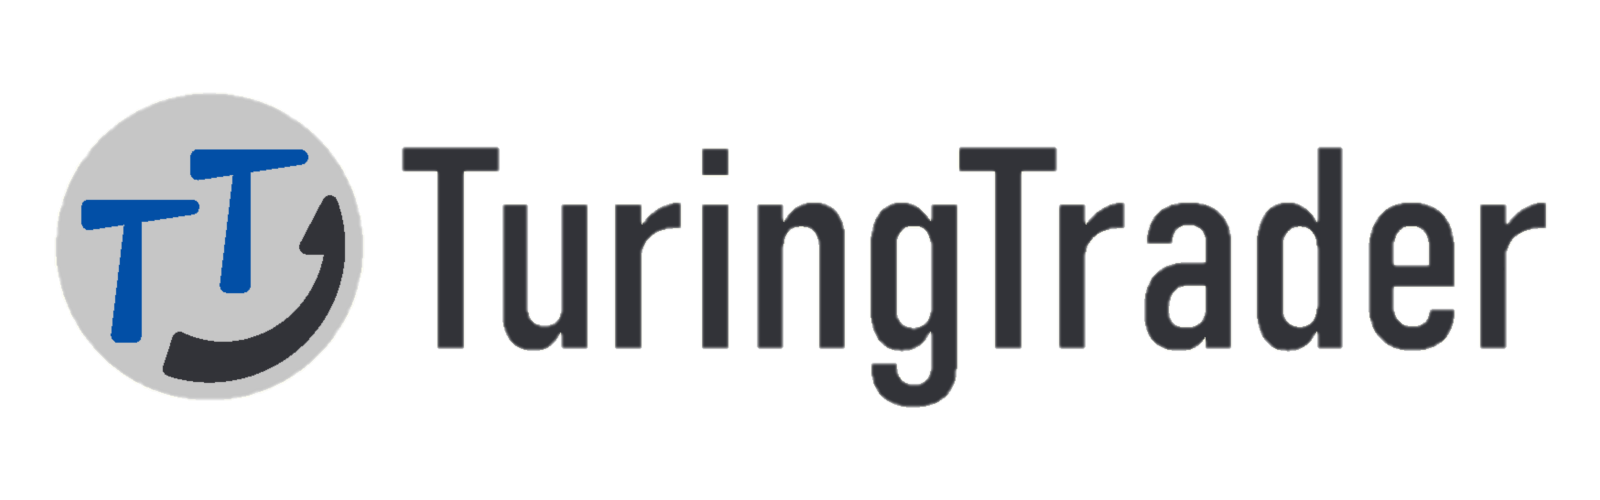 TuringTrader logo